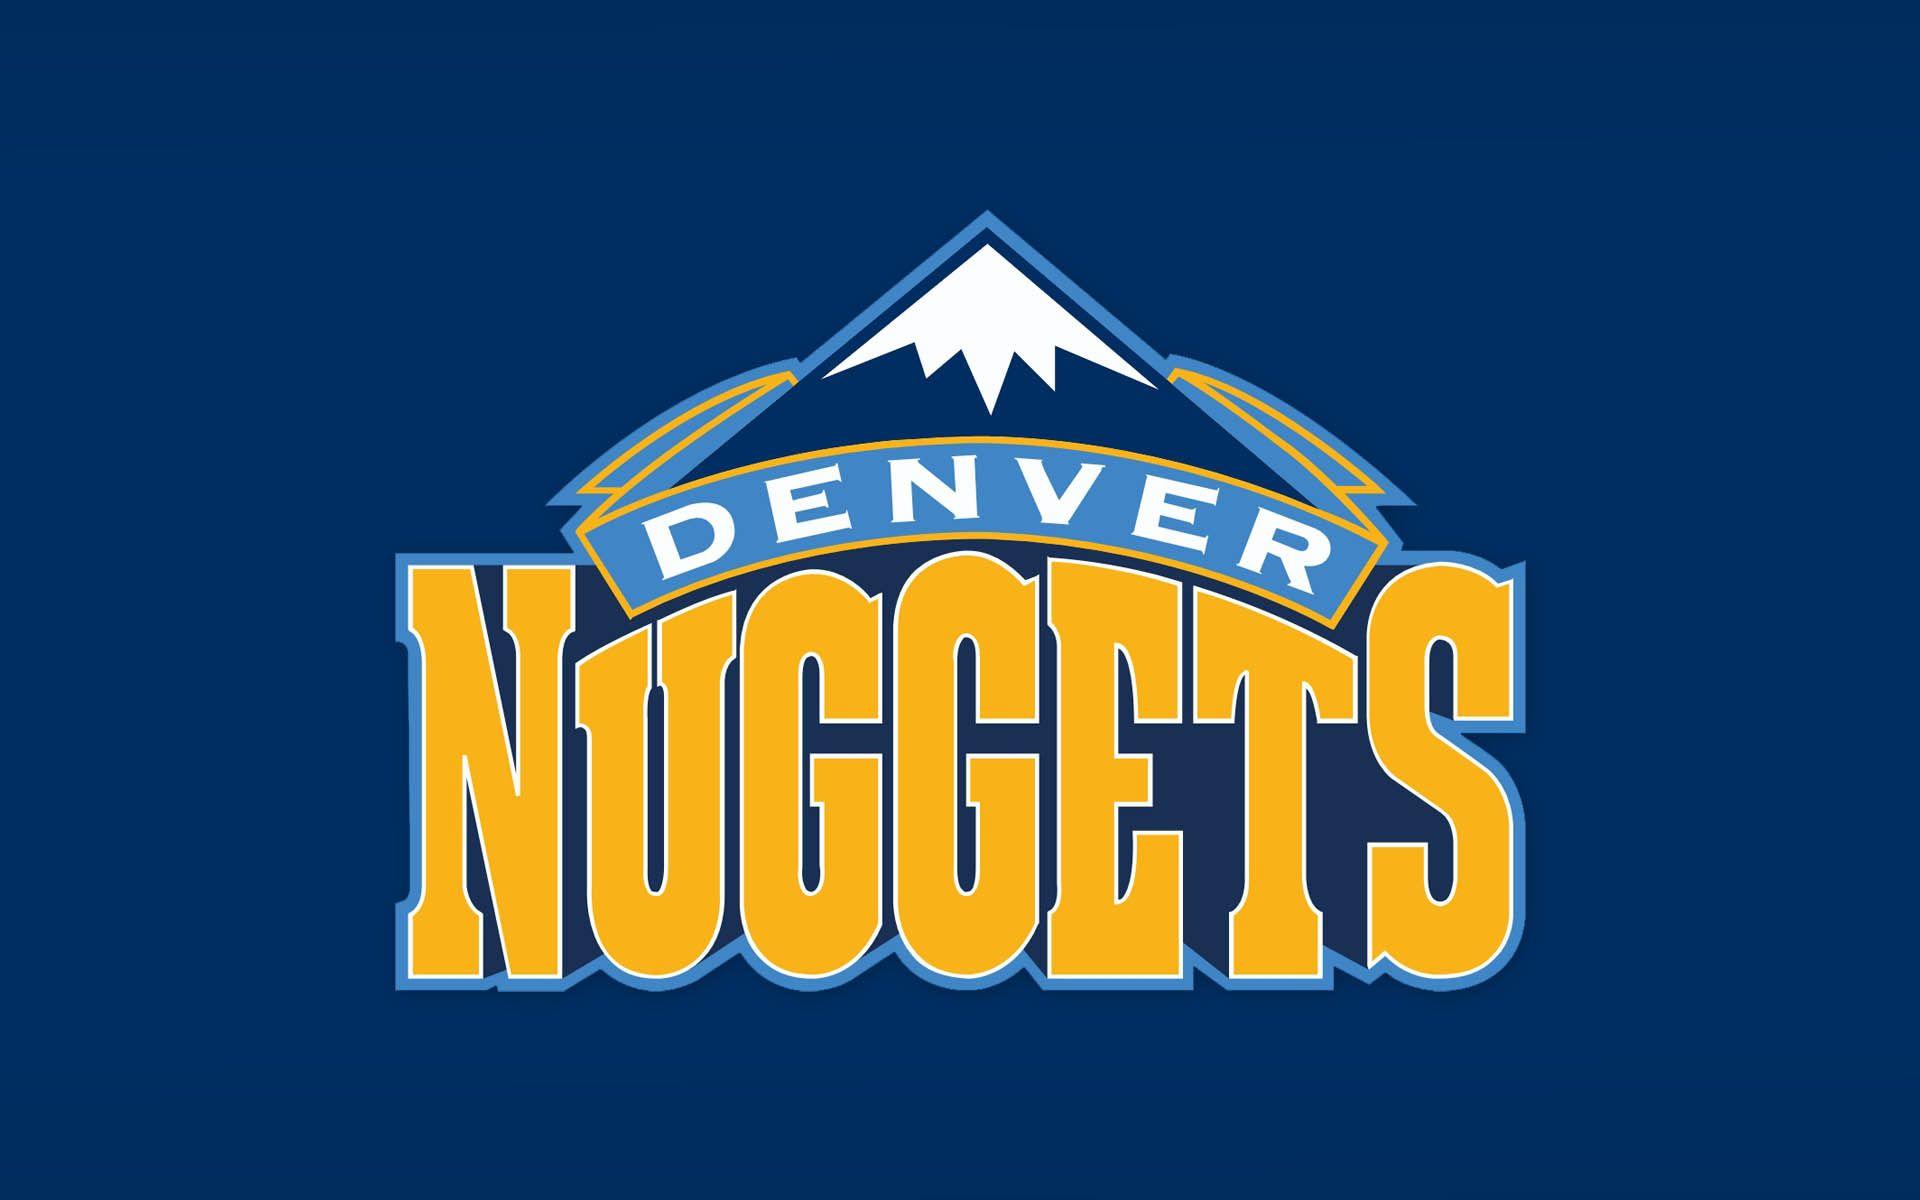 NUGGETS FOOTBALL Team LOGOS. Denver Nuggets Basketball Team Logo